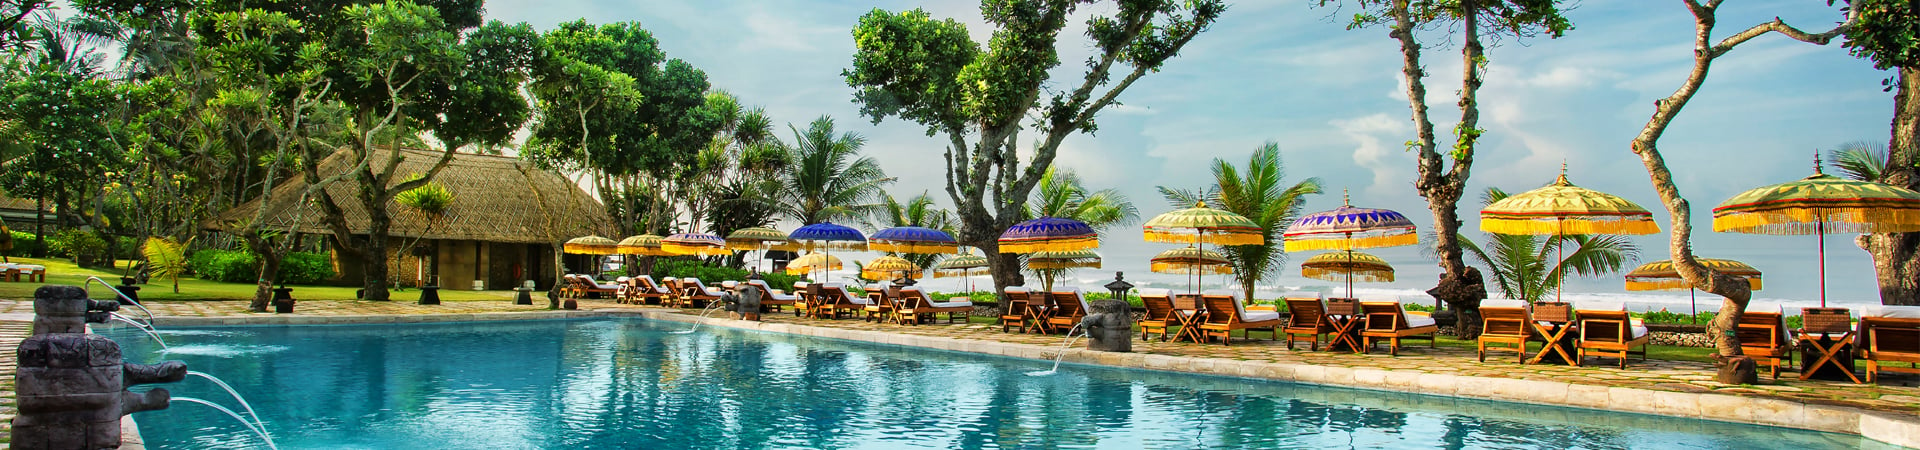 Image of The Oberoi Beach Resort, Bali